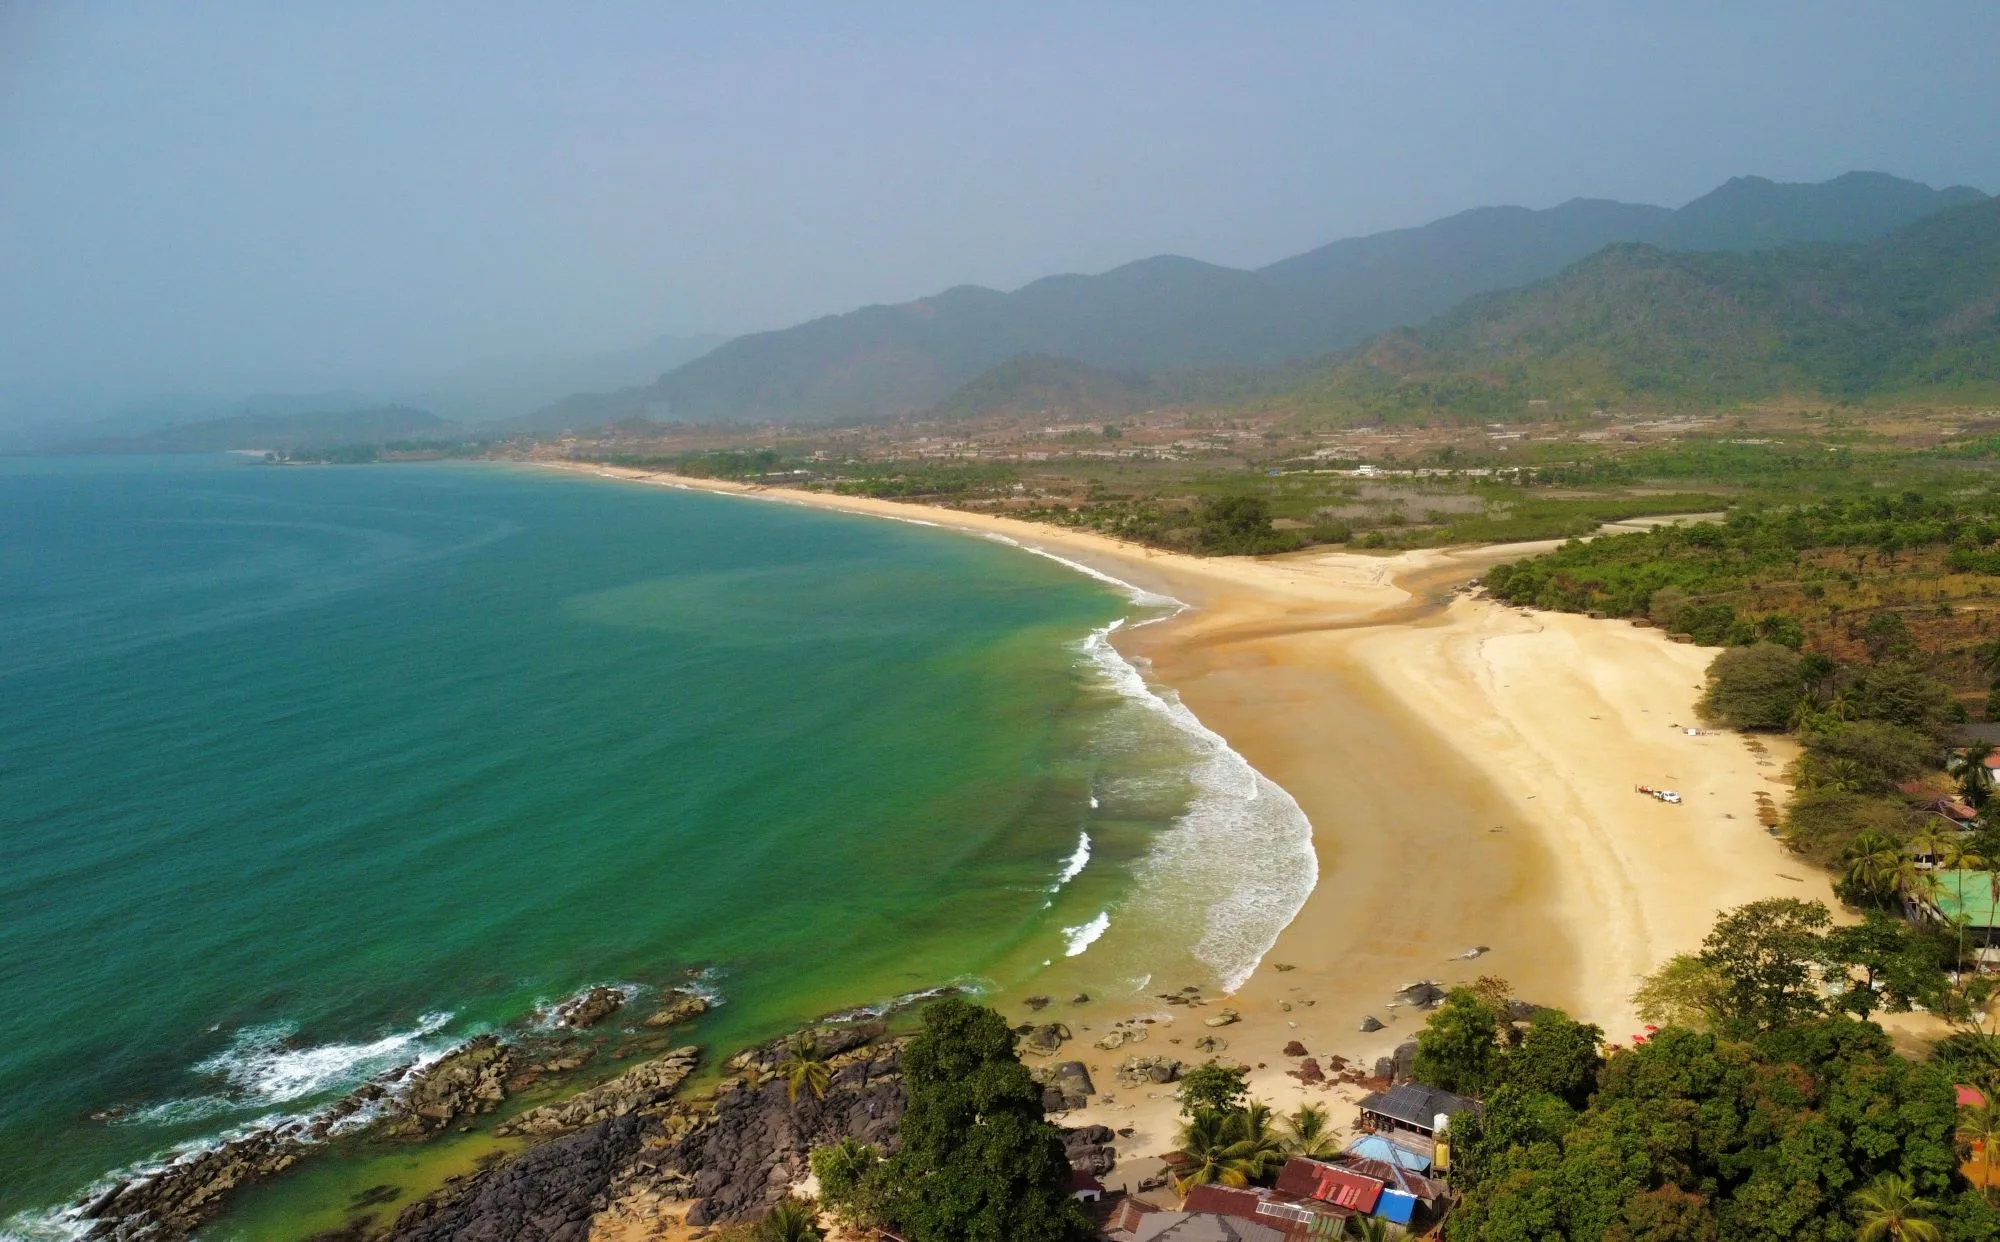 Top beach activities to try in Sierra Leone